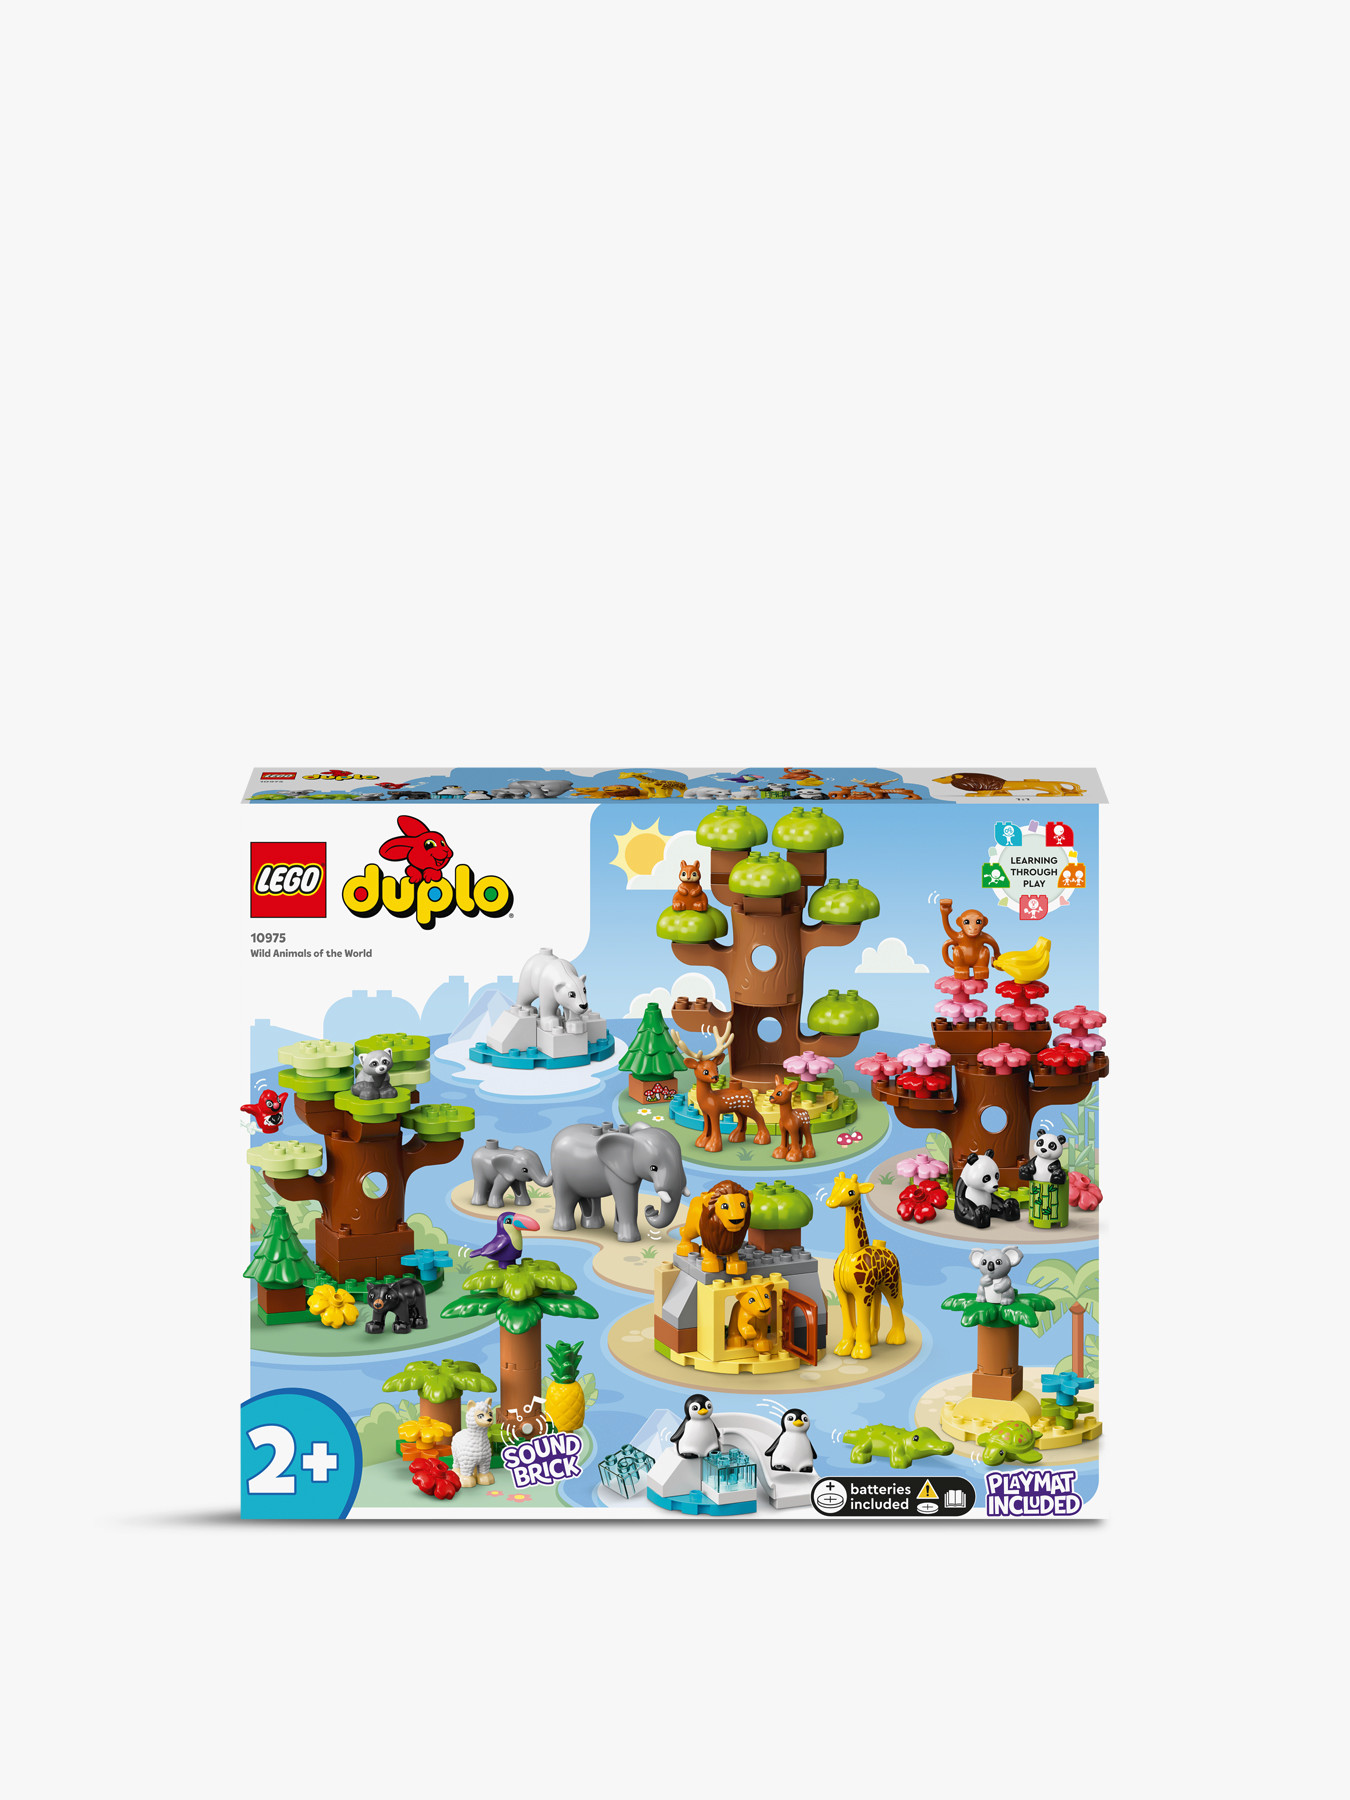 LEGO DUPLO Wild Animals of the World Toy Set 10975 | LEGO & Construction  Toys | Fenwick